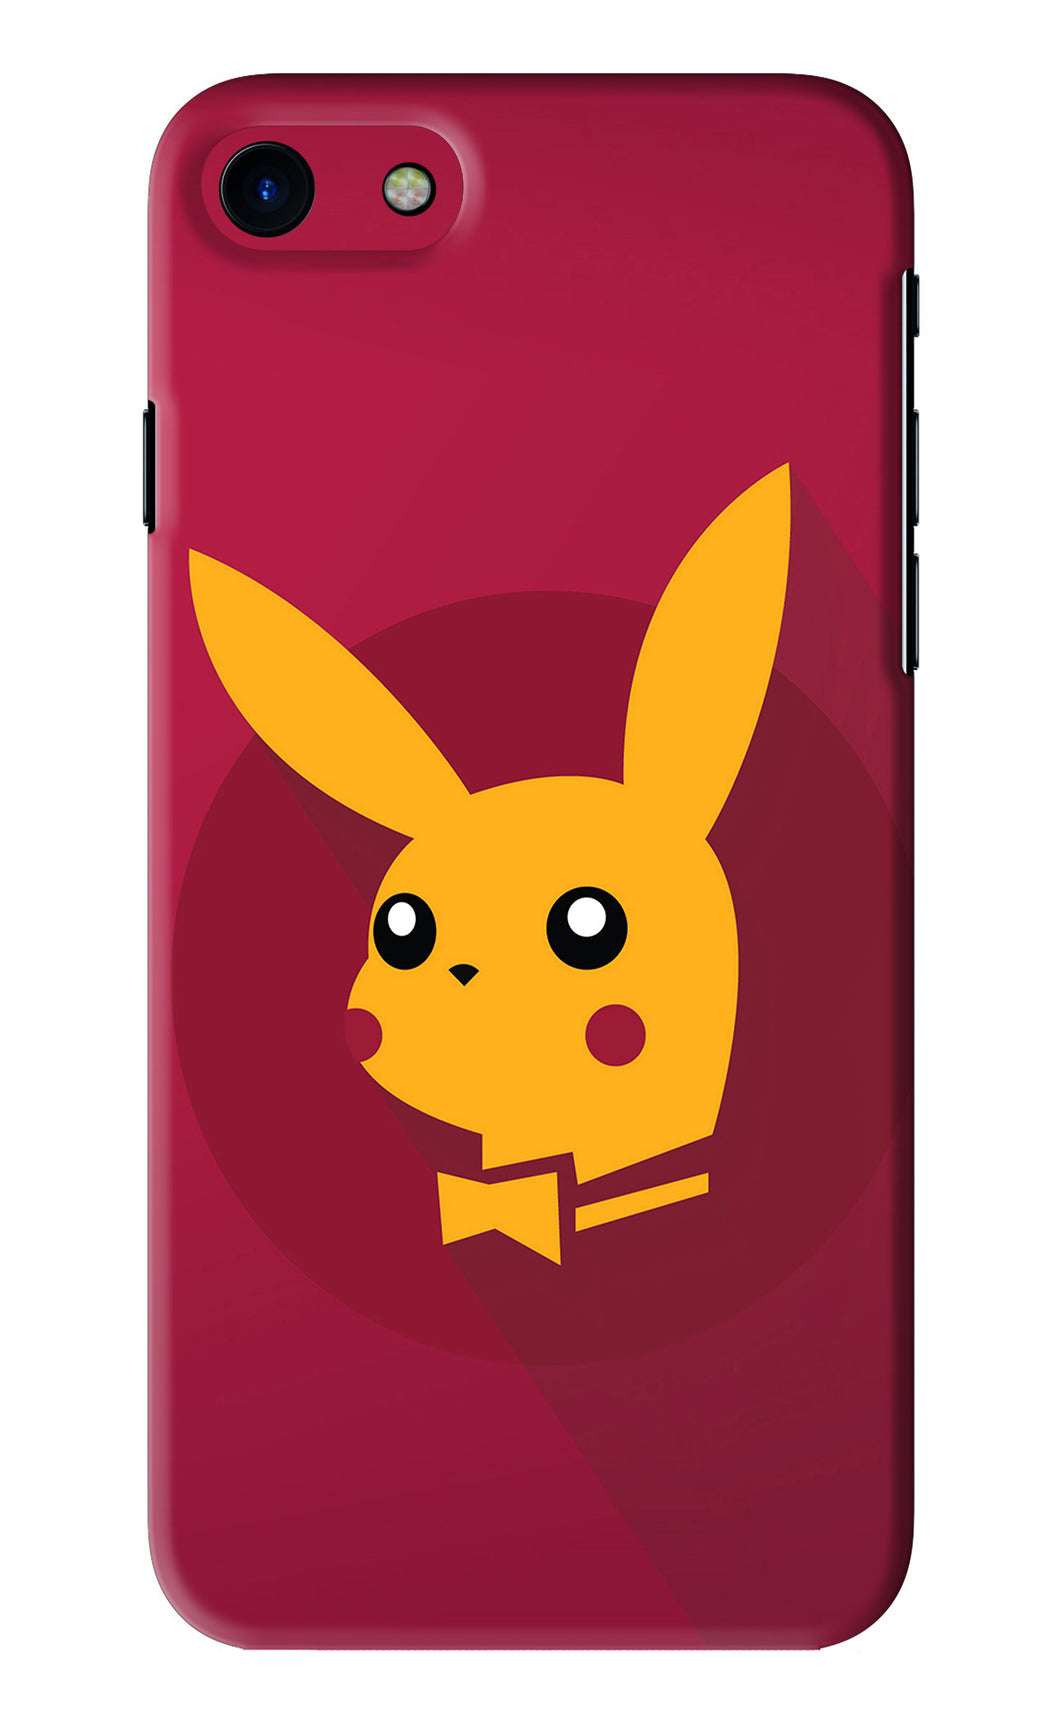 Pikachu iPhone SE 2020 Back Skin Wrap